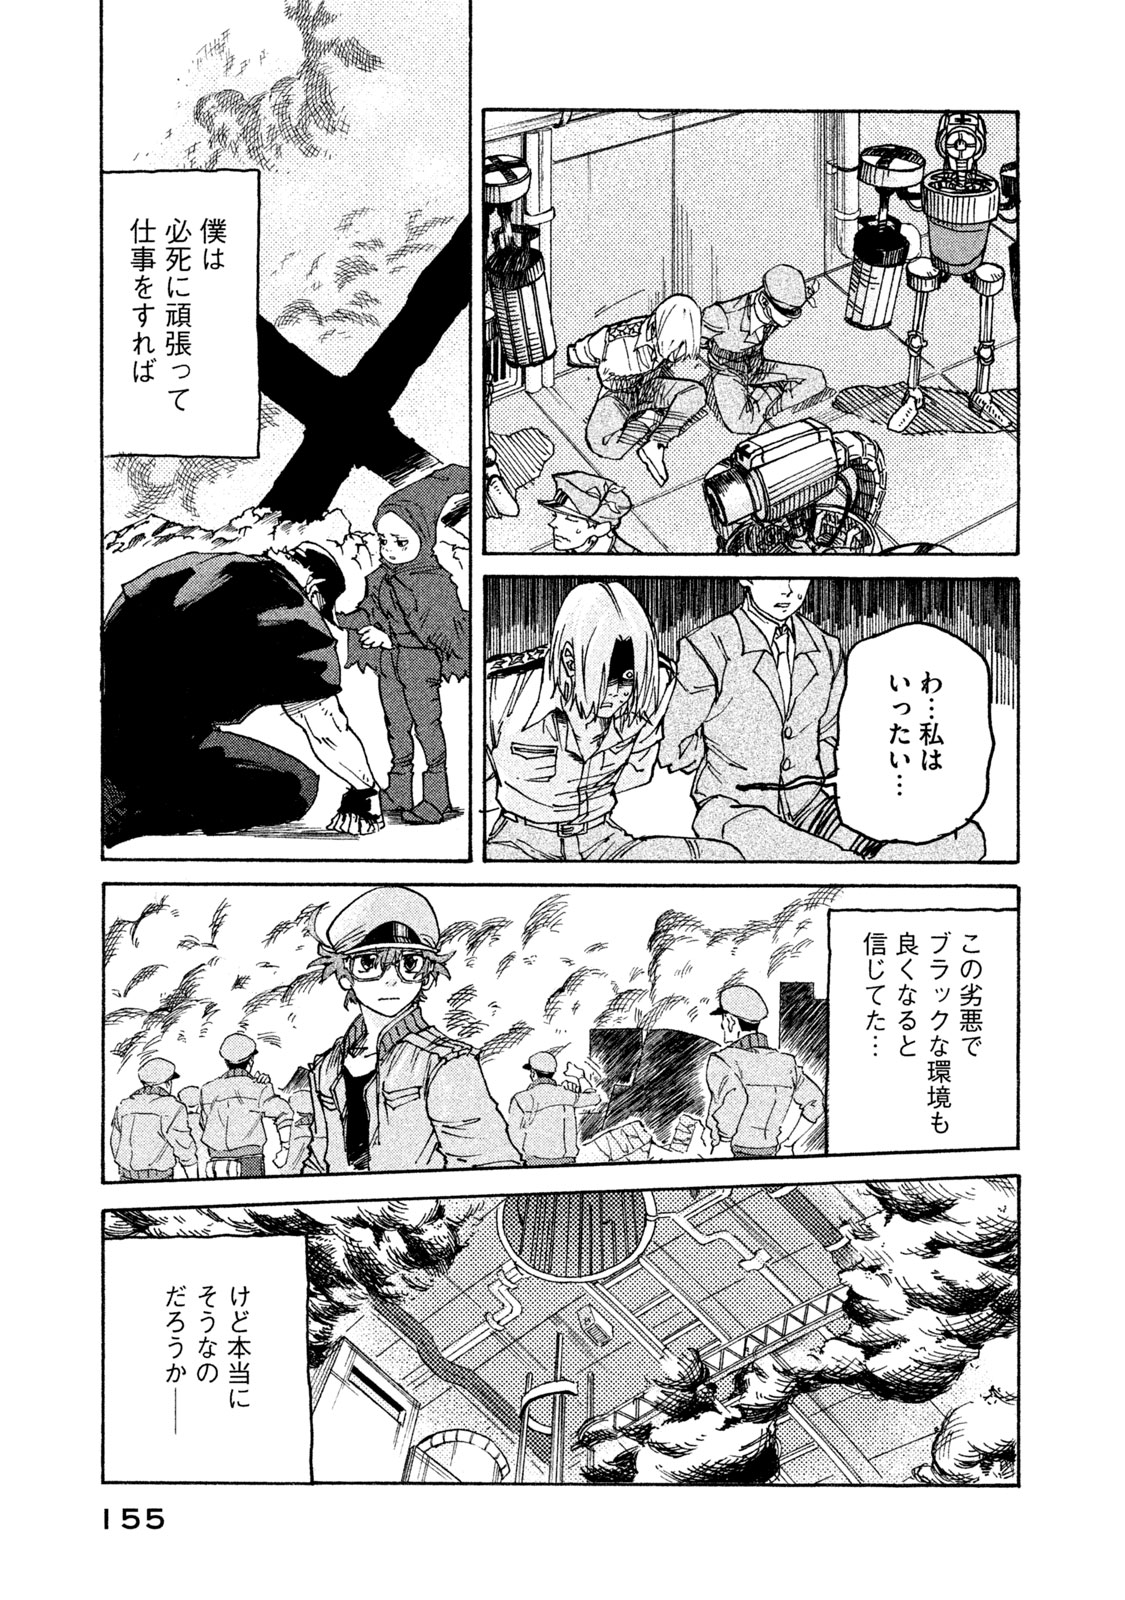 Hataraku Saibou BLACK - Chapter 5 - Page 29